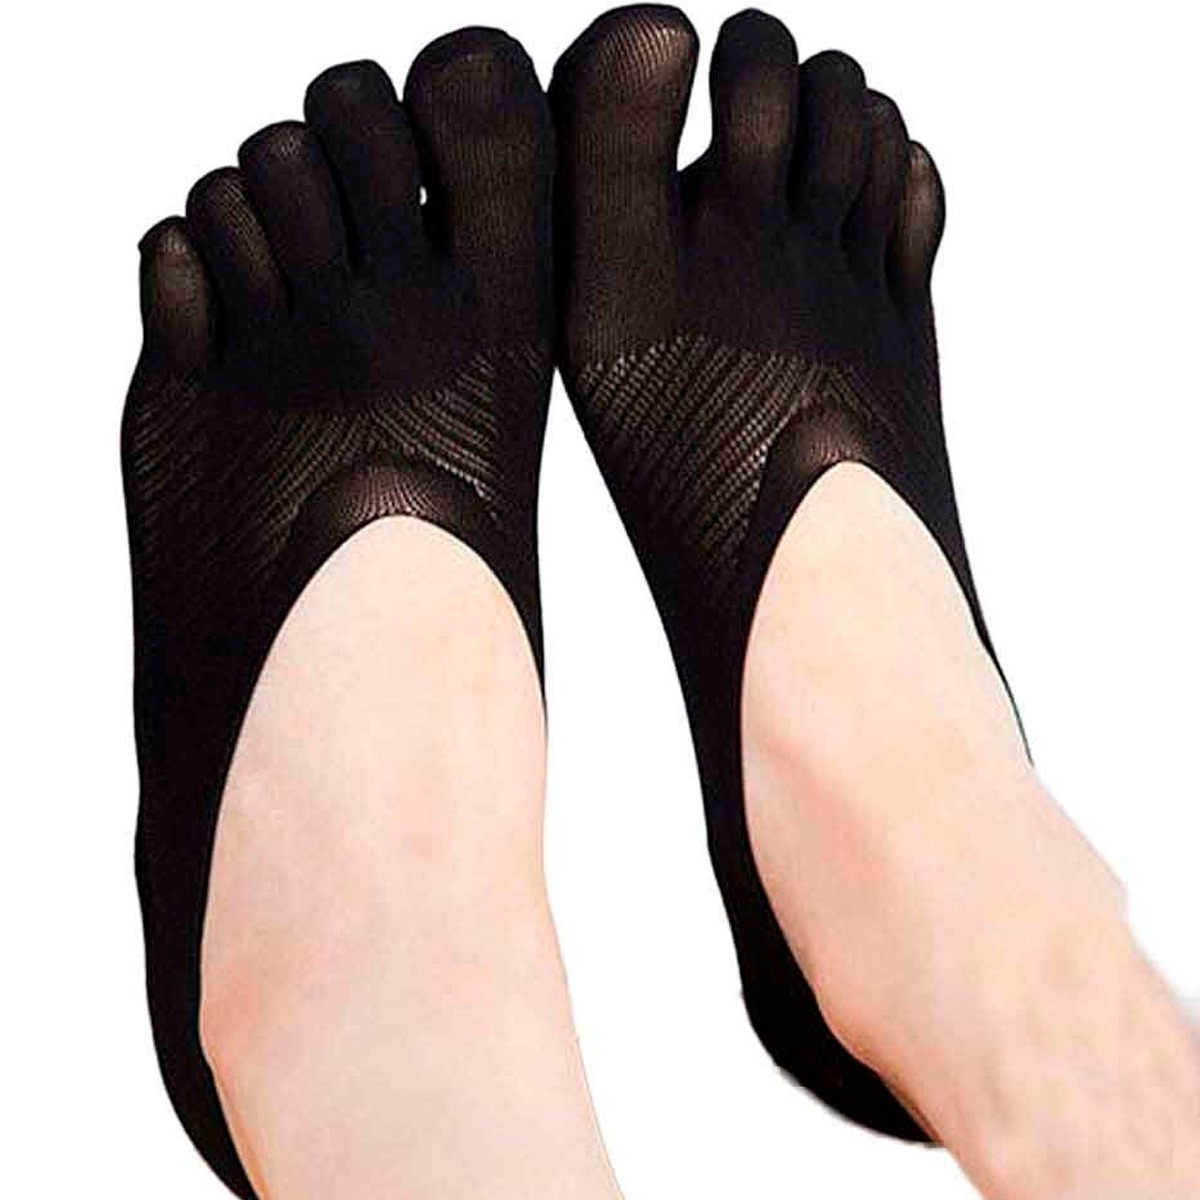 Tudorose 3 6 9 pares de calcetines de nailon manitas pie sombra de un tamaño natural